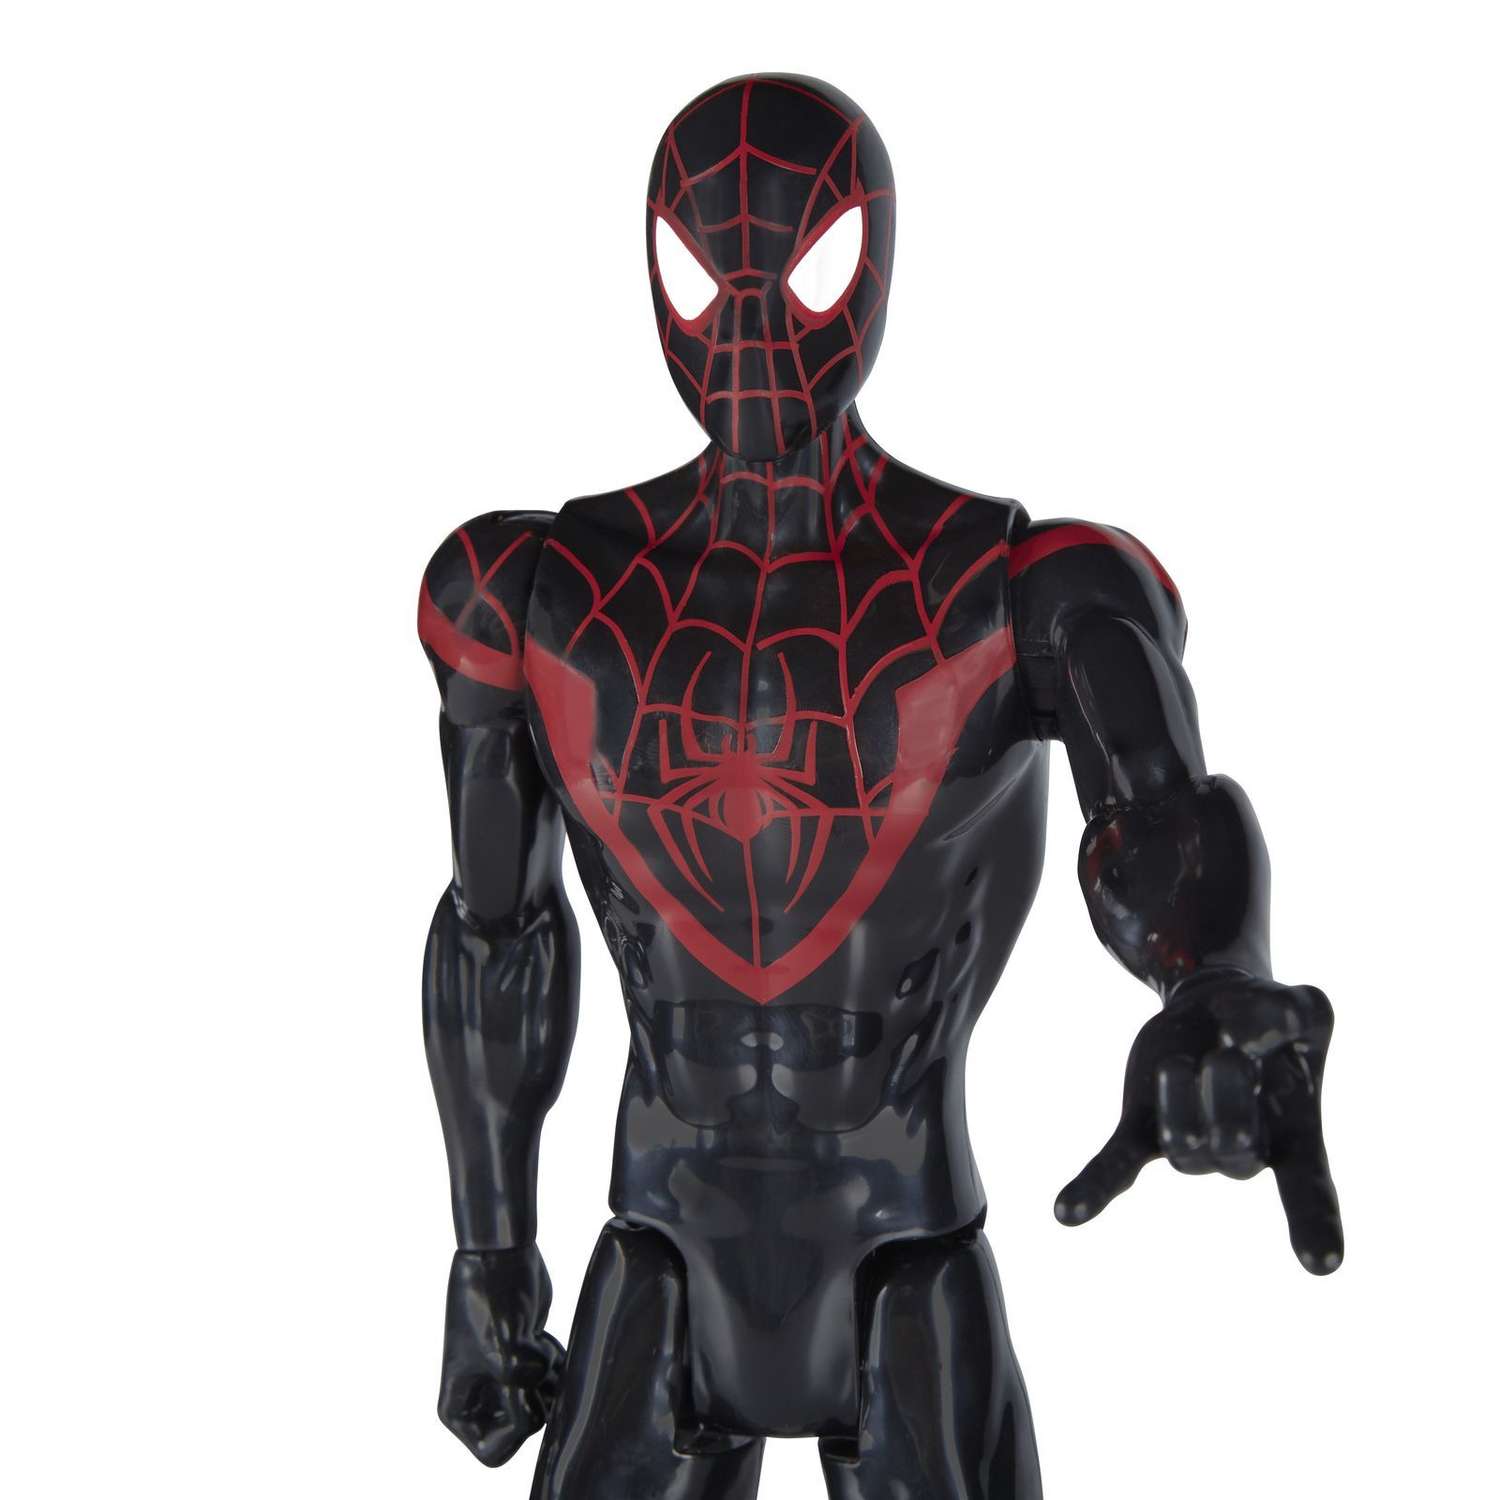 Фигурка Человек-Паук (Spider-man) (SM) Power pack Человек-паук в ассортименте E2324EU4 - фото 28